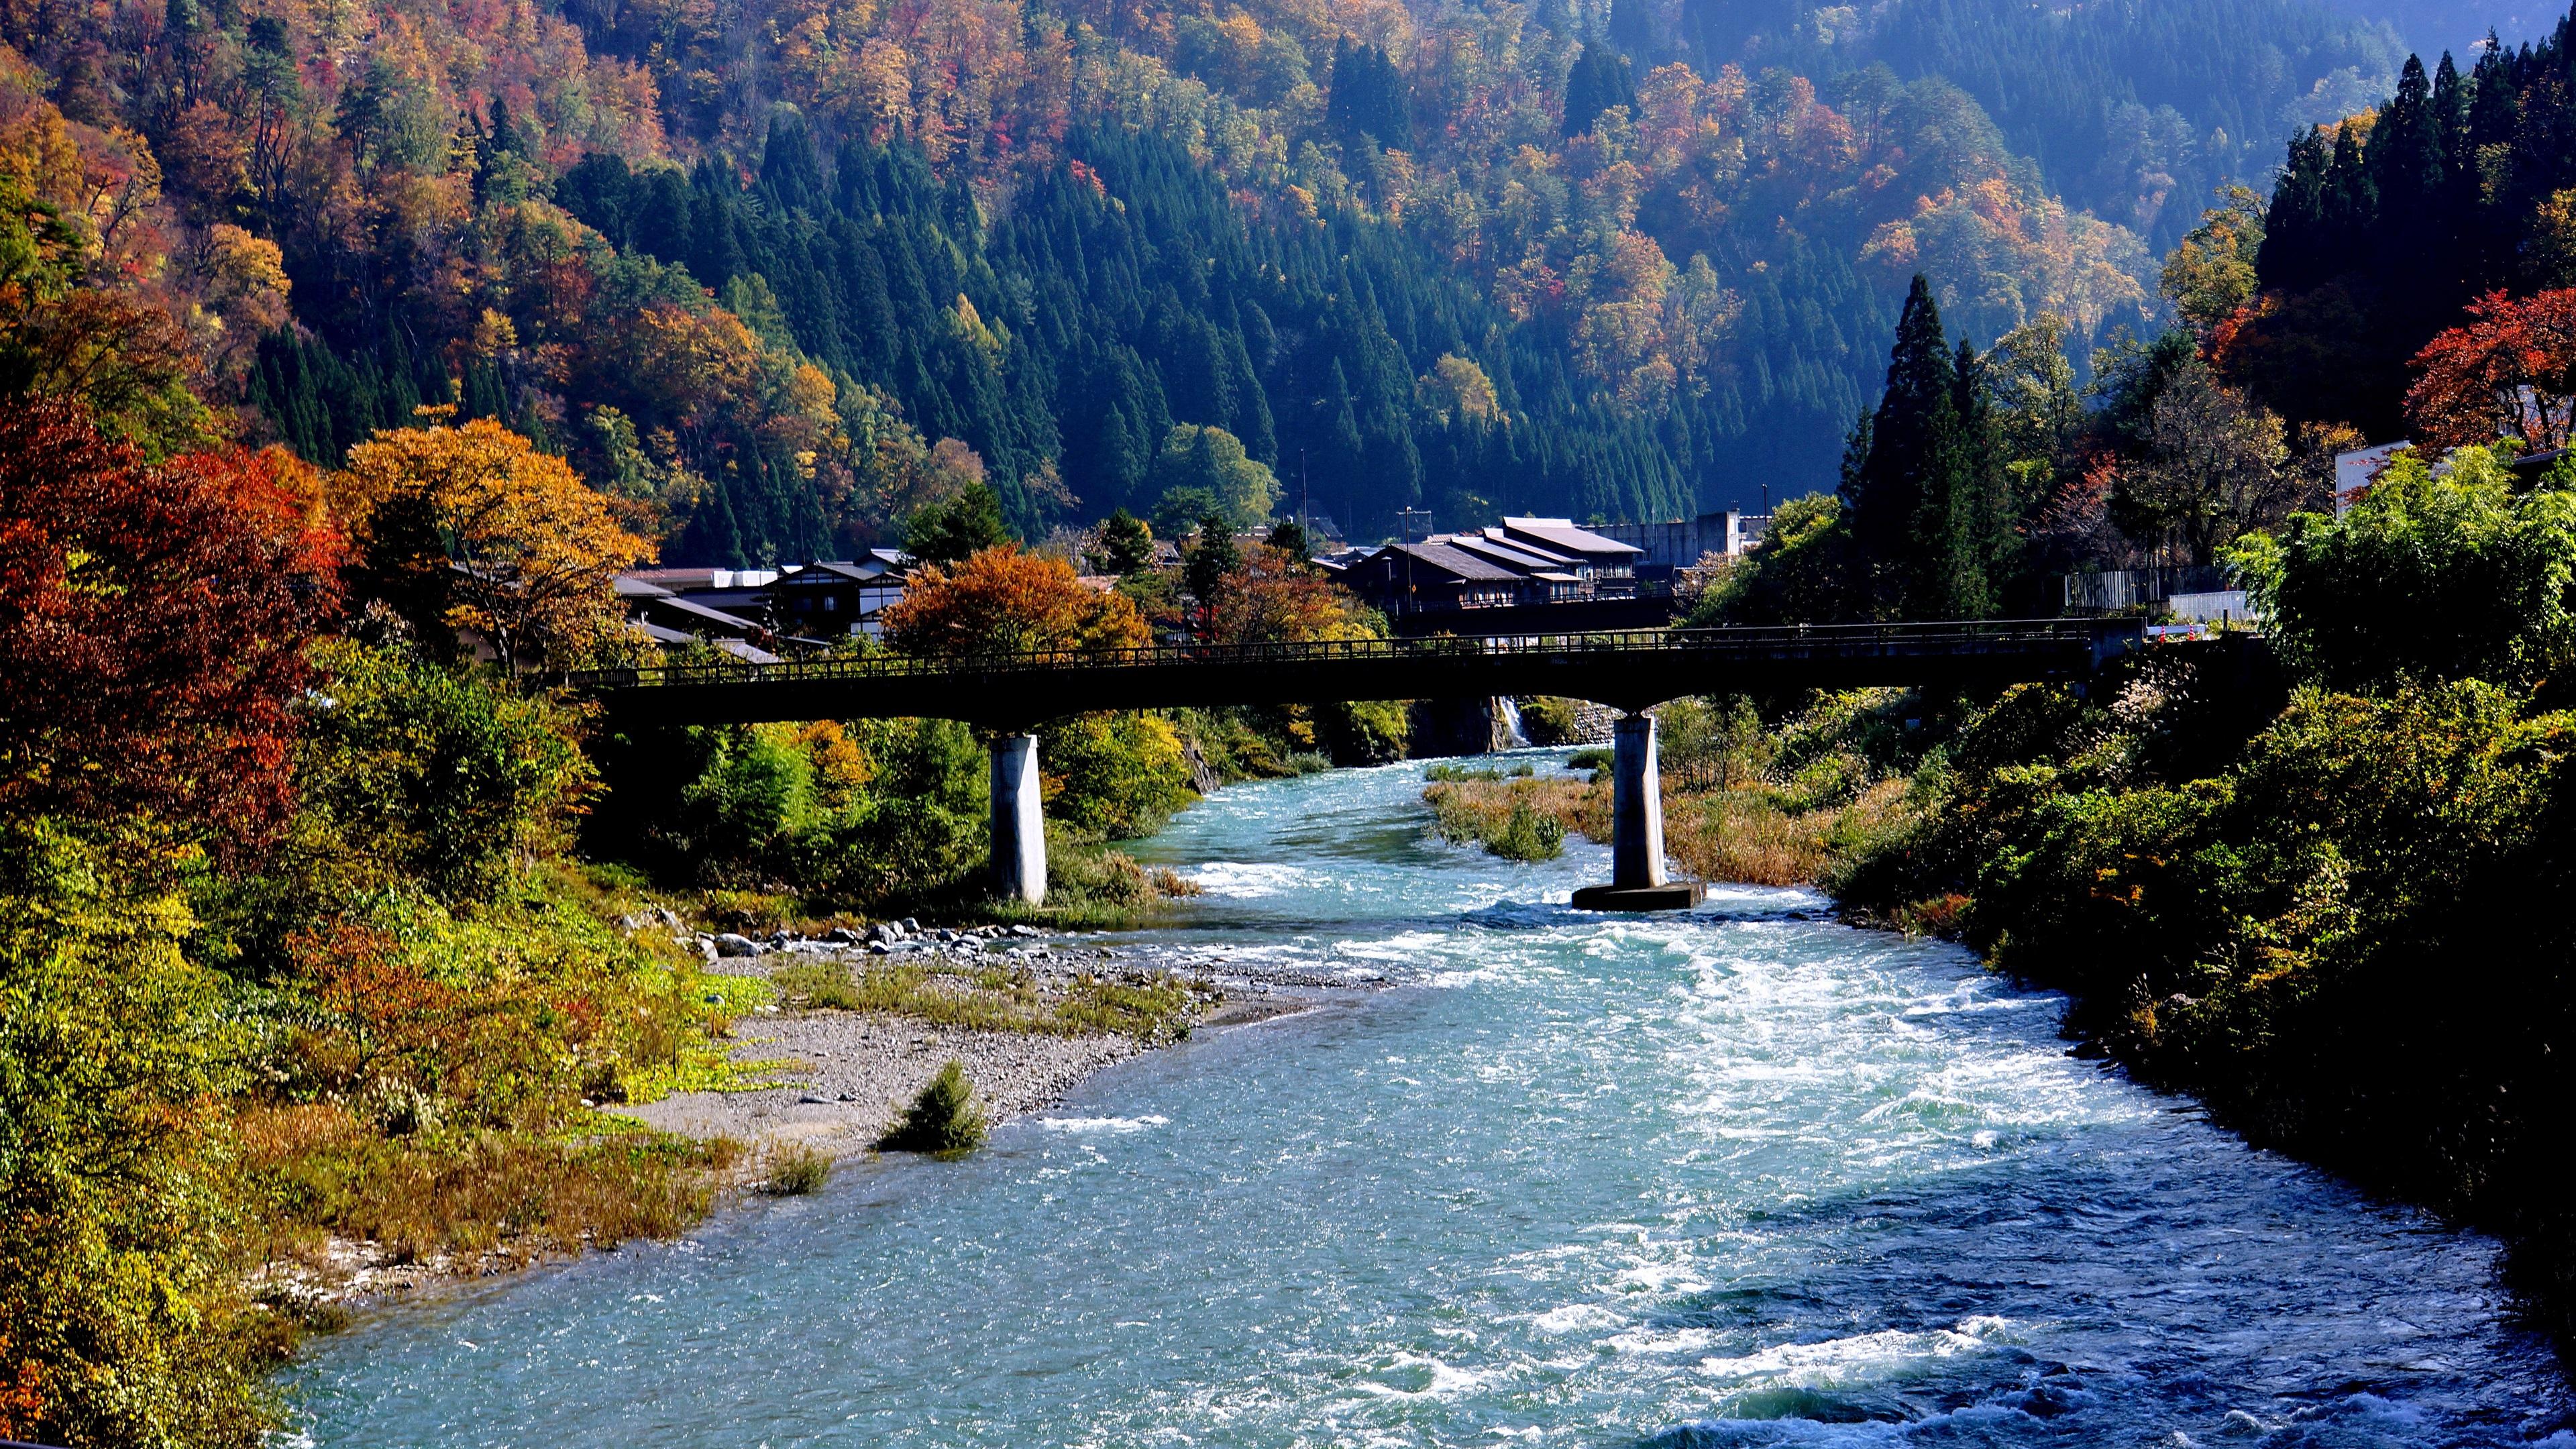 Wallpaper Shirakawa Go, Japan, Village, River, Bridge, Mountain, Trees 3840x2160 UHD 4K Picture, Image